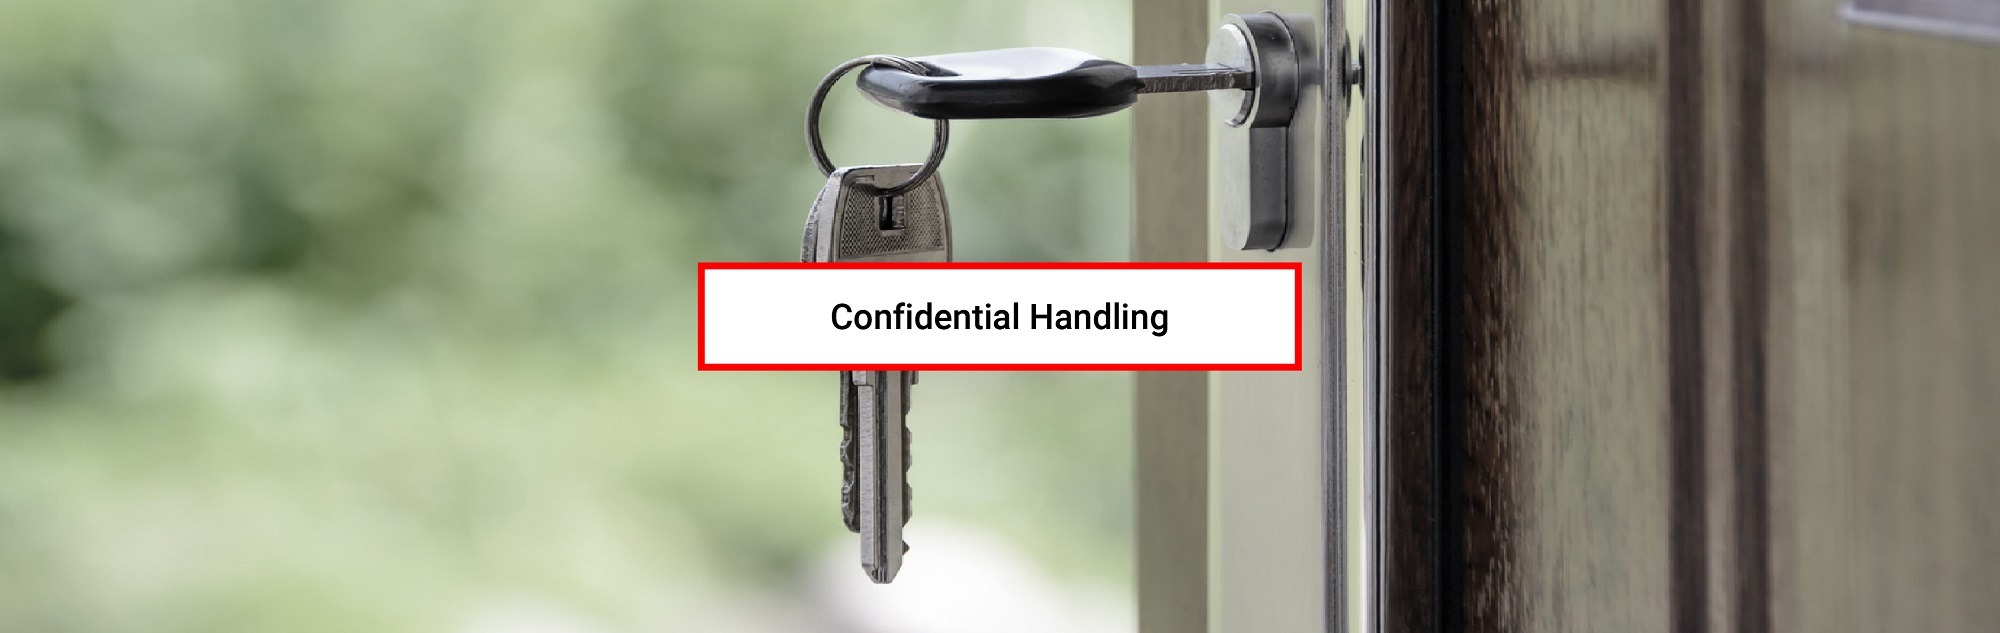 Confidential Handling